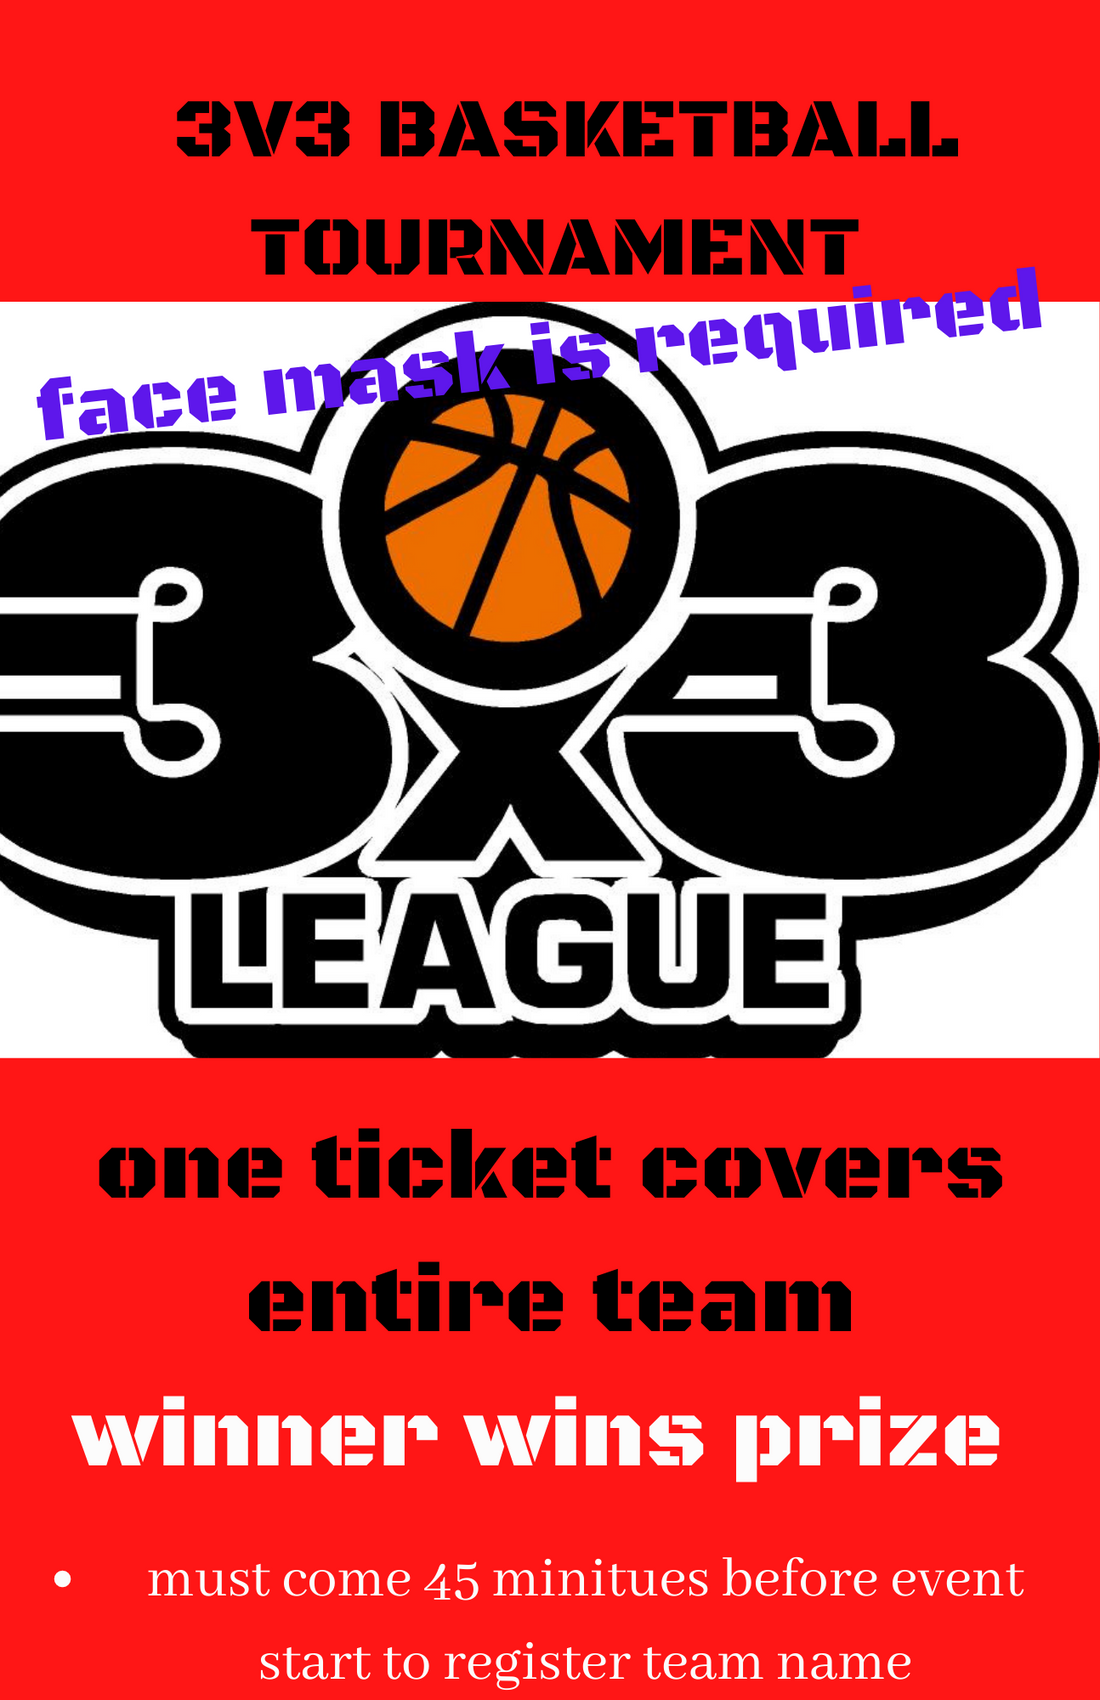 3v3 Basketball Tournament Registration